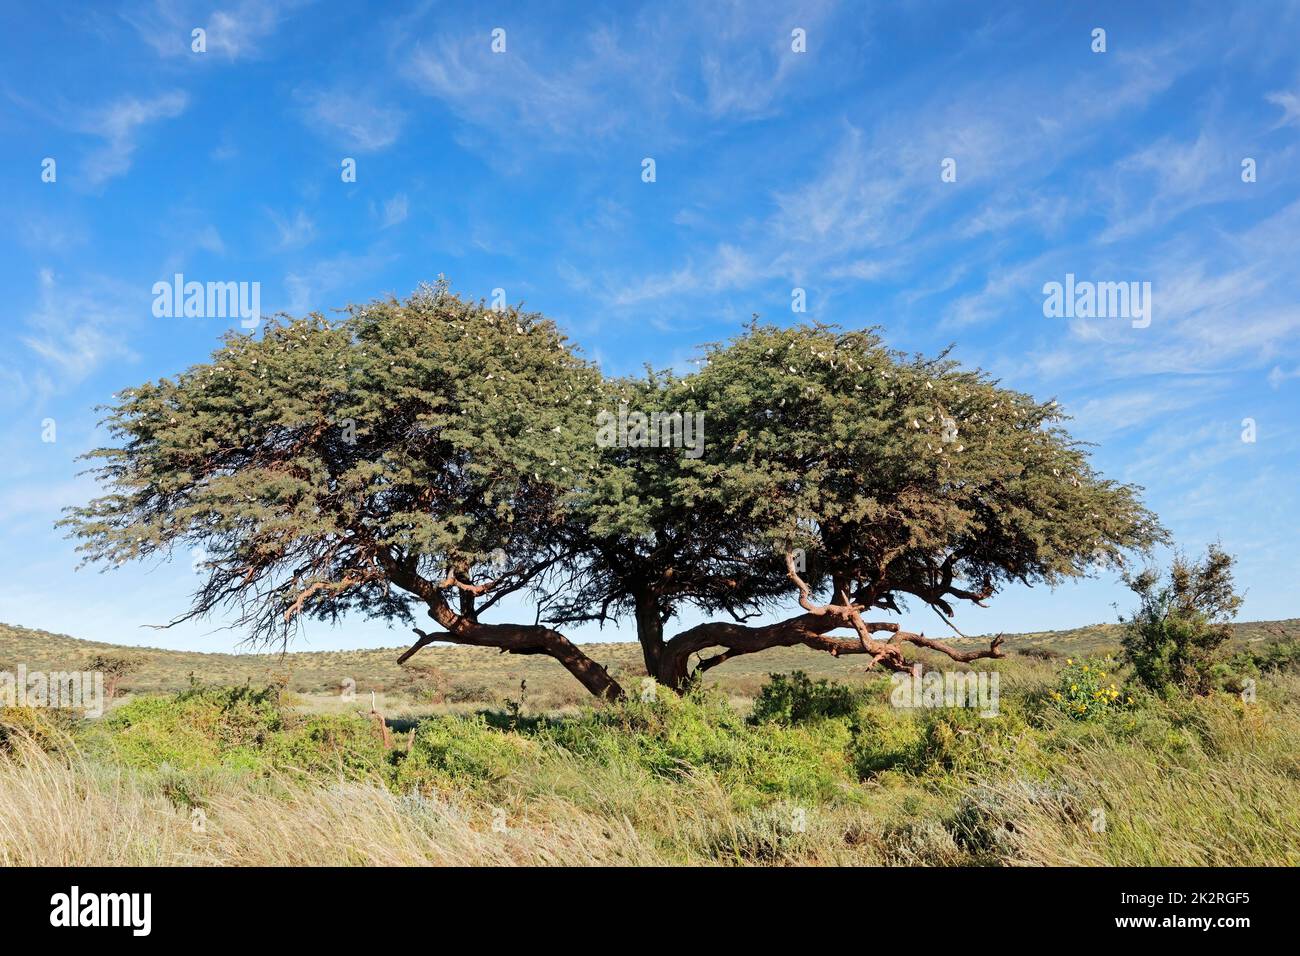 Kameldornbaum vor blauem Himmel Stockfoto